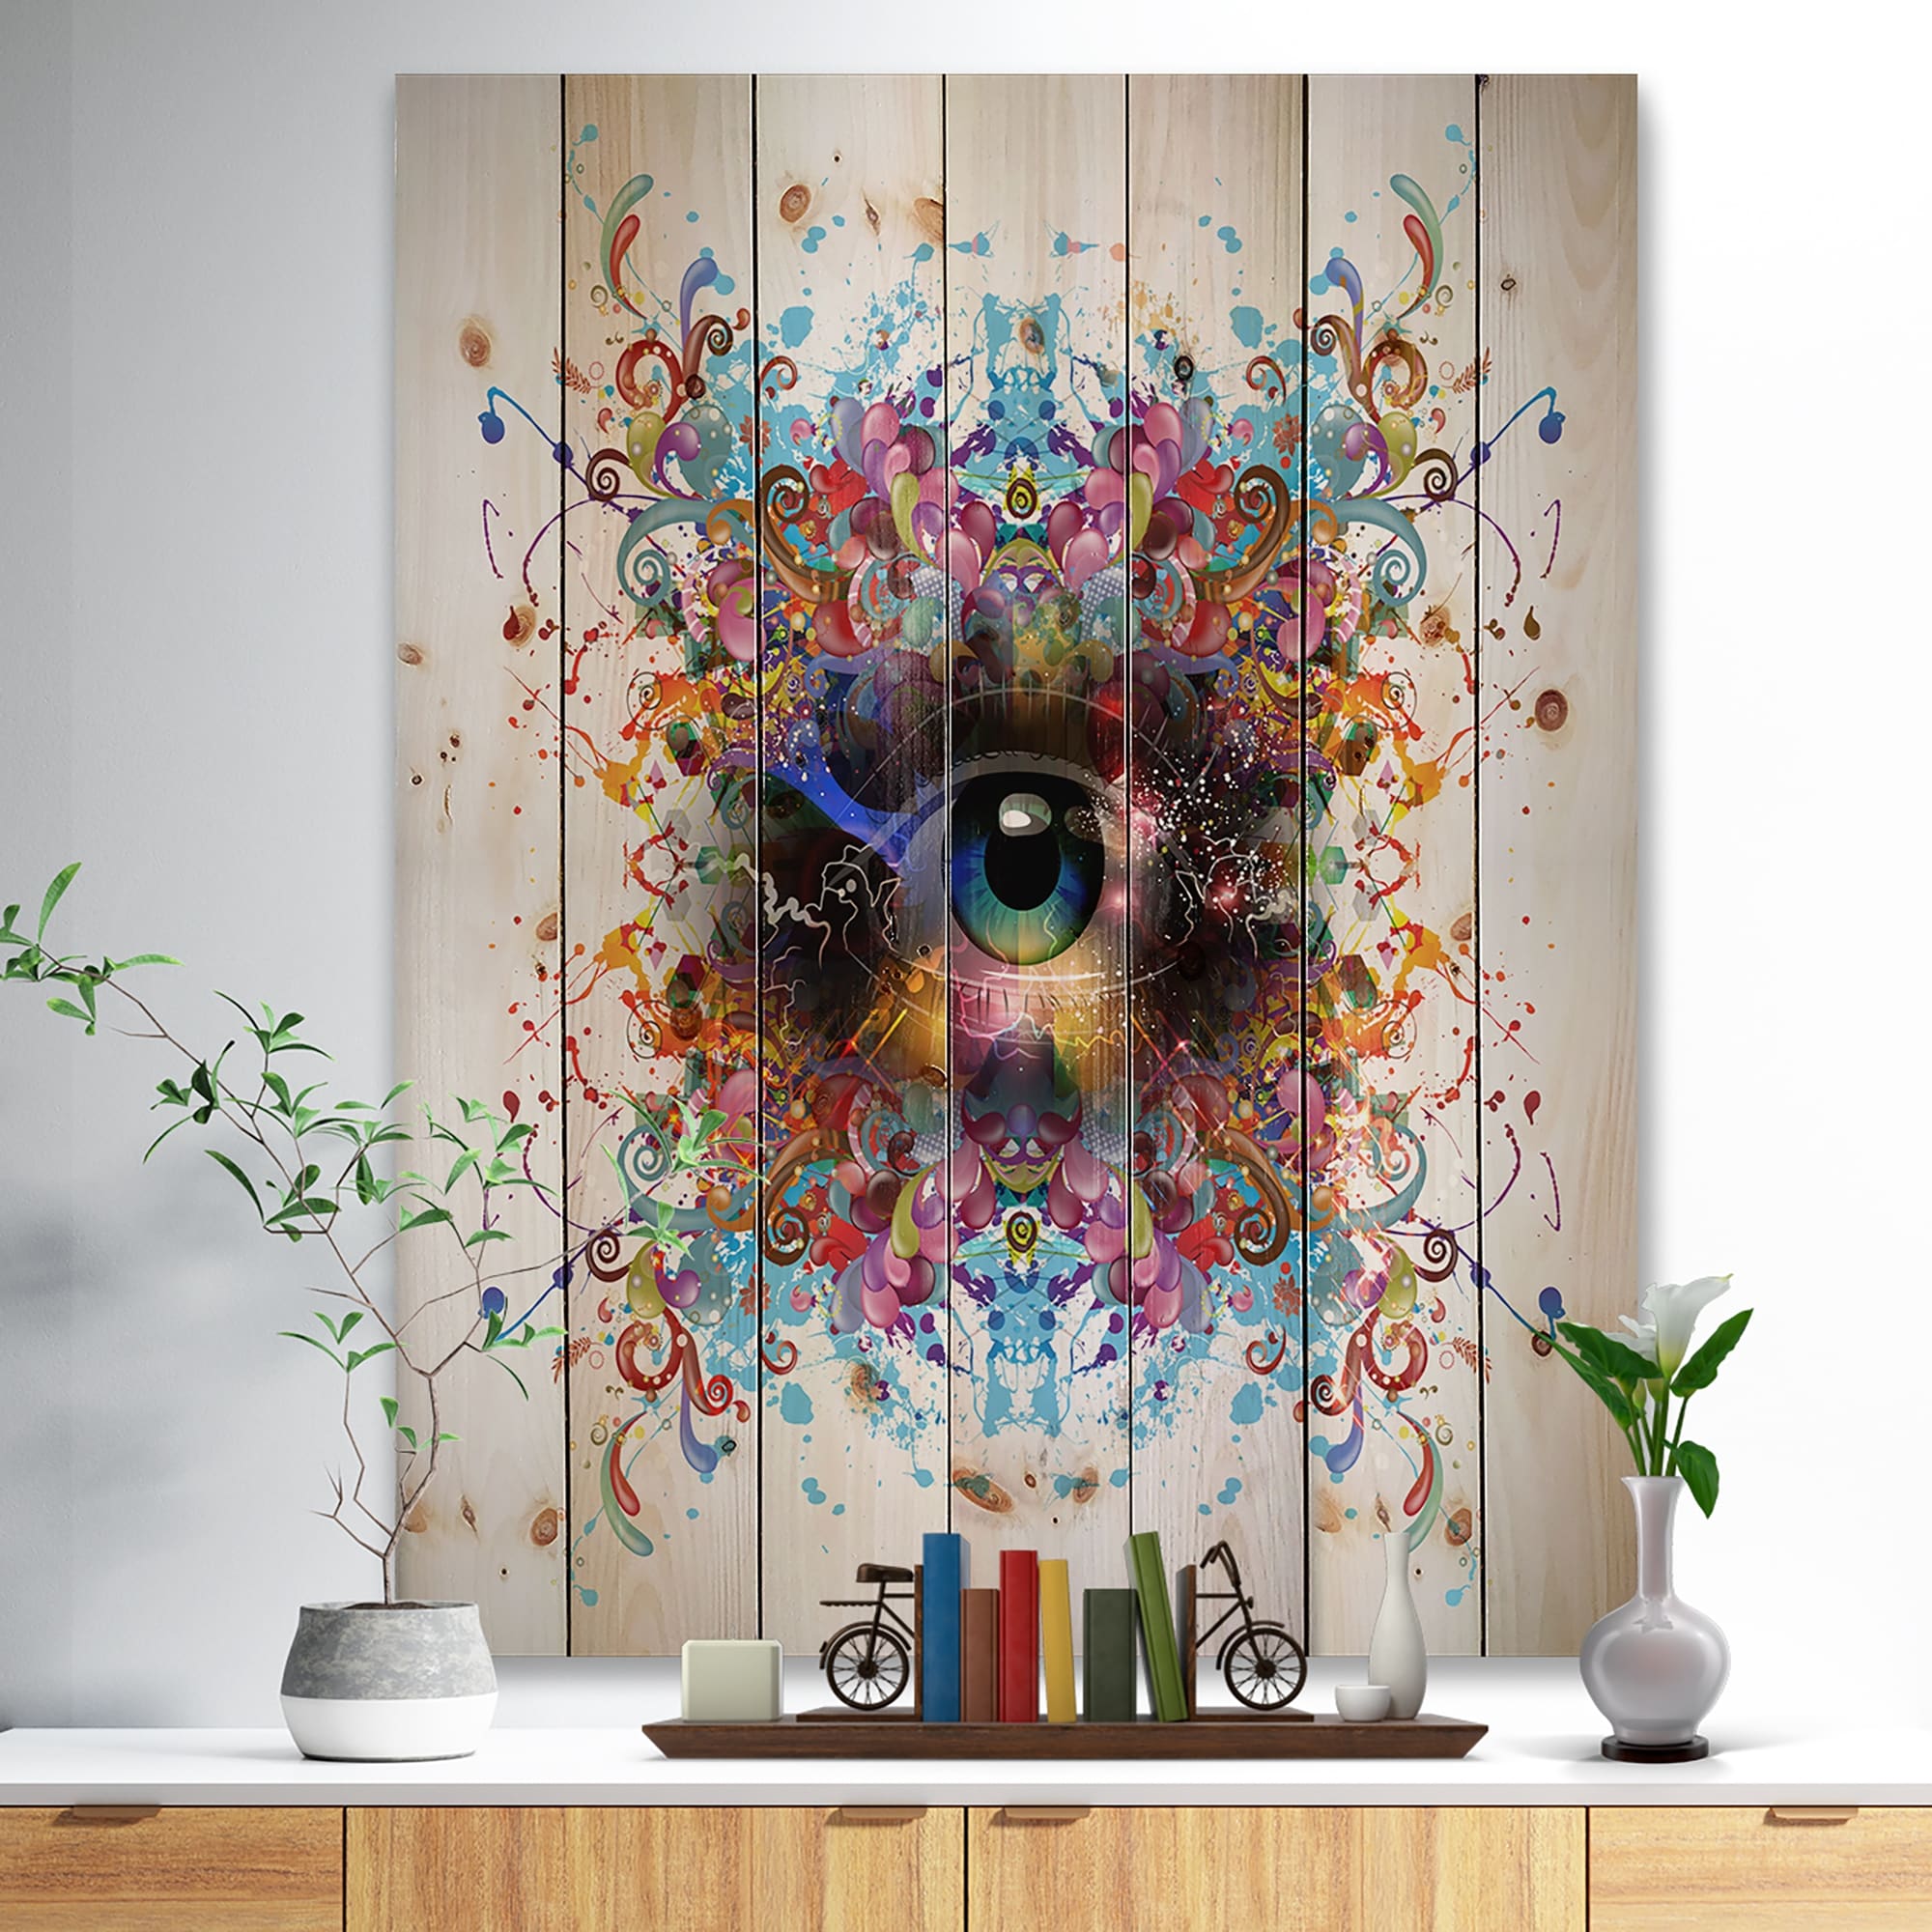 Designart 'Magic Eye with Flowers' Animal Print on Natural Pine Wood Blue  Bed Bath  Beyond 23107475